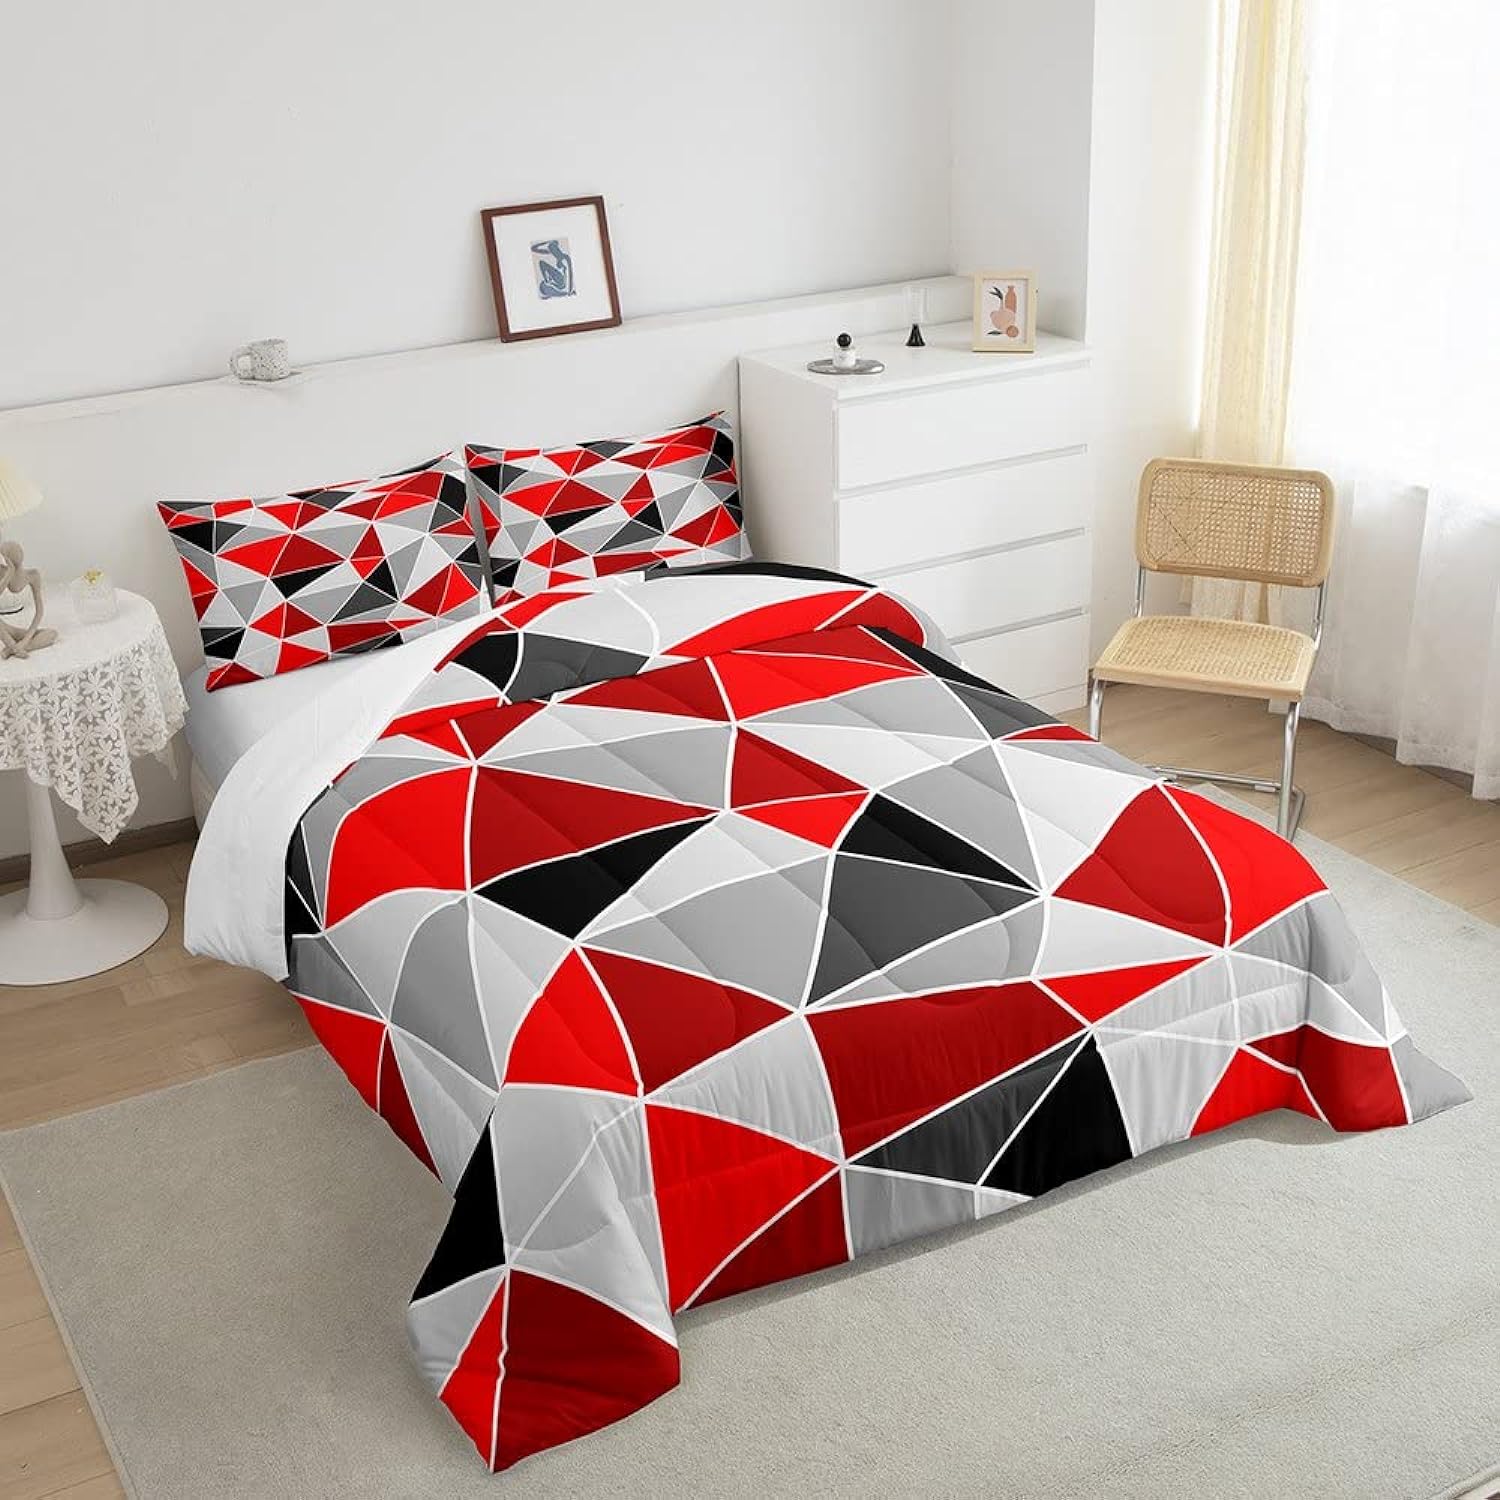 thinkstar Geometric Triangle Comforter Set Full,Red Grey Black Graphic Bedding Set,Colorful Diamond Printed Down Comforter For Kids …